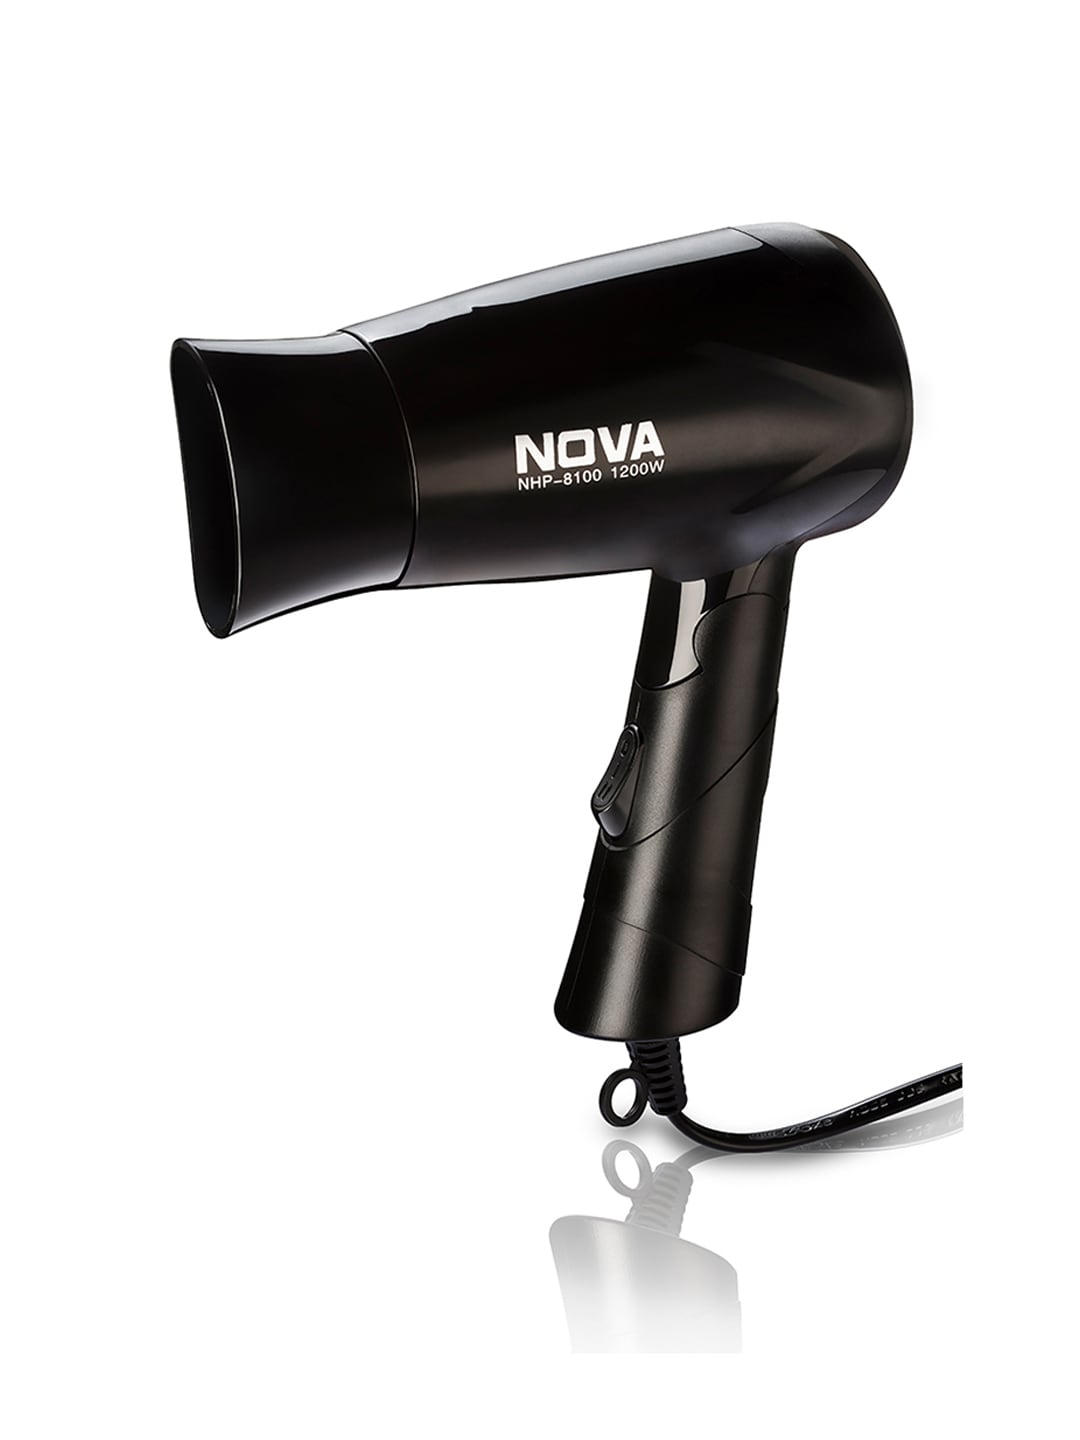 NOVA NHP 8100 Silky Shine Hot & Cold Foldable Hair Dryer - Black Price in India